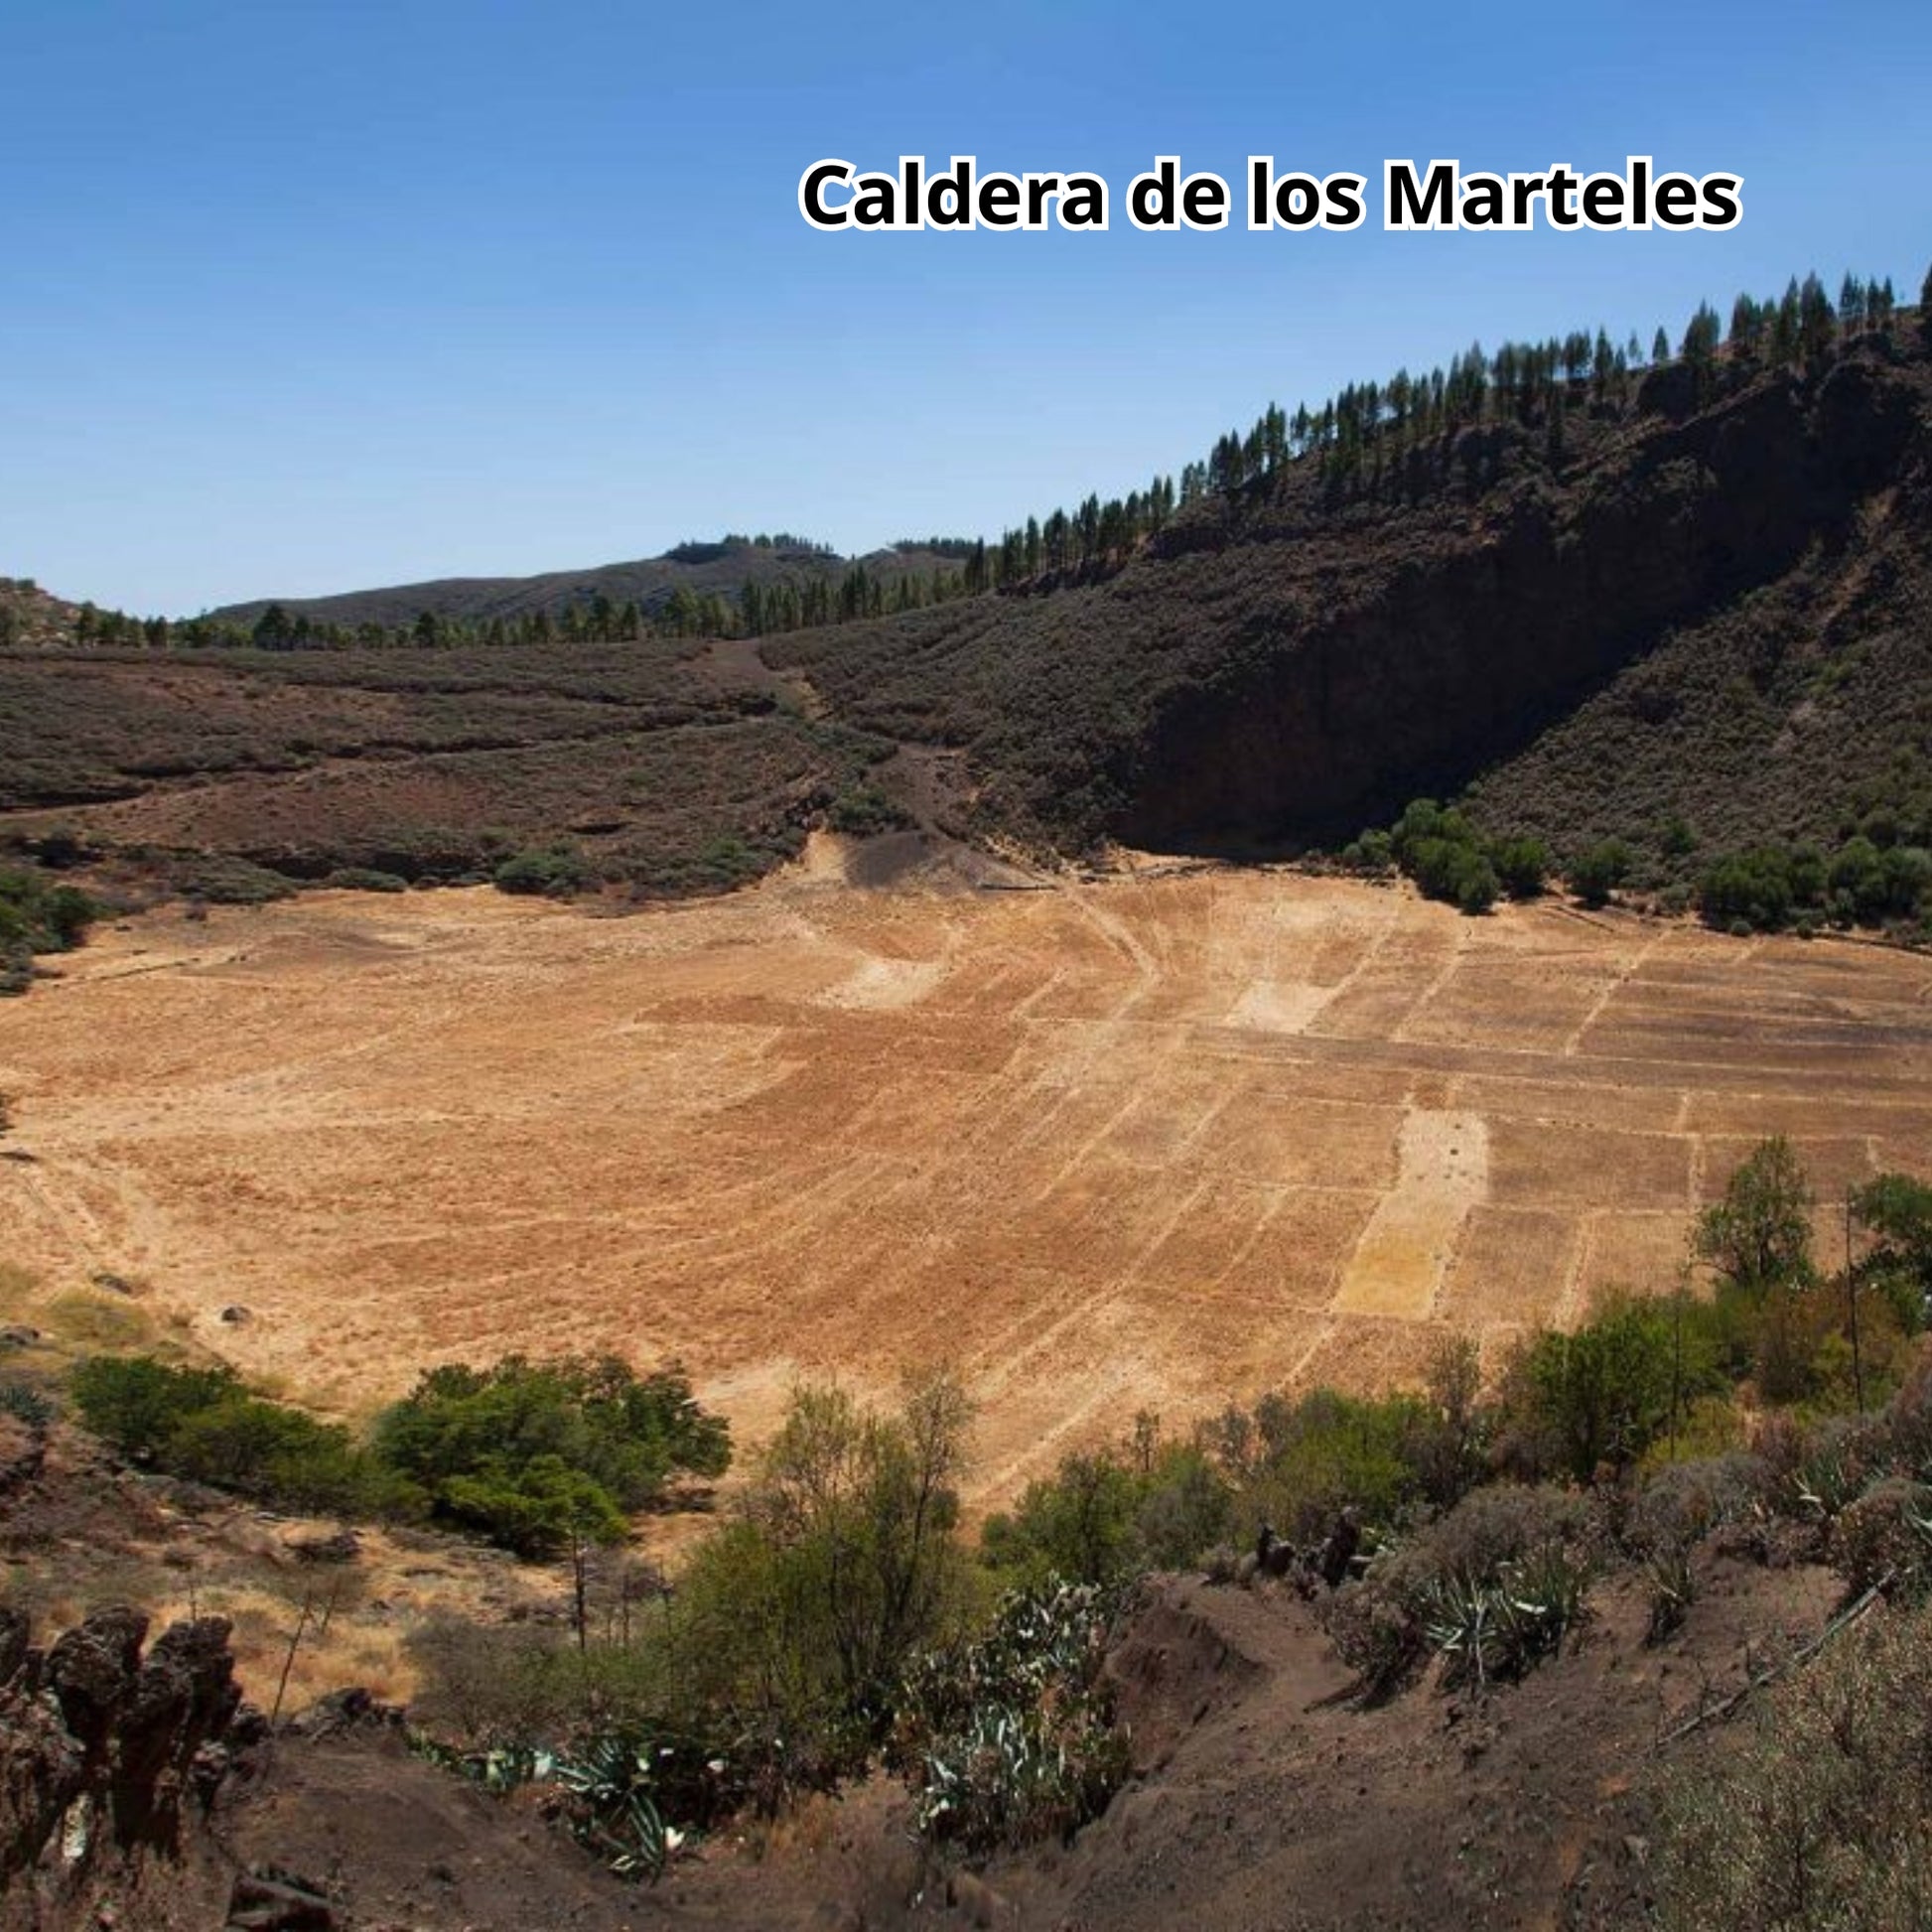 The Caldera de los Marteles - bus tour gran canaria